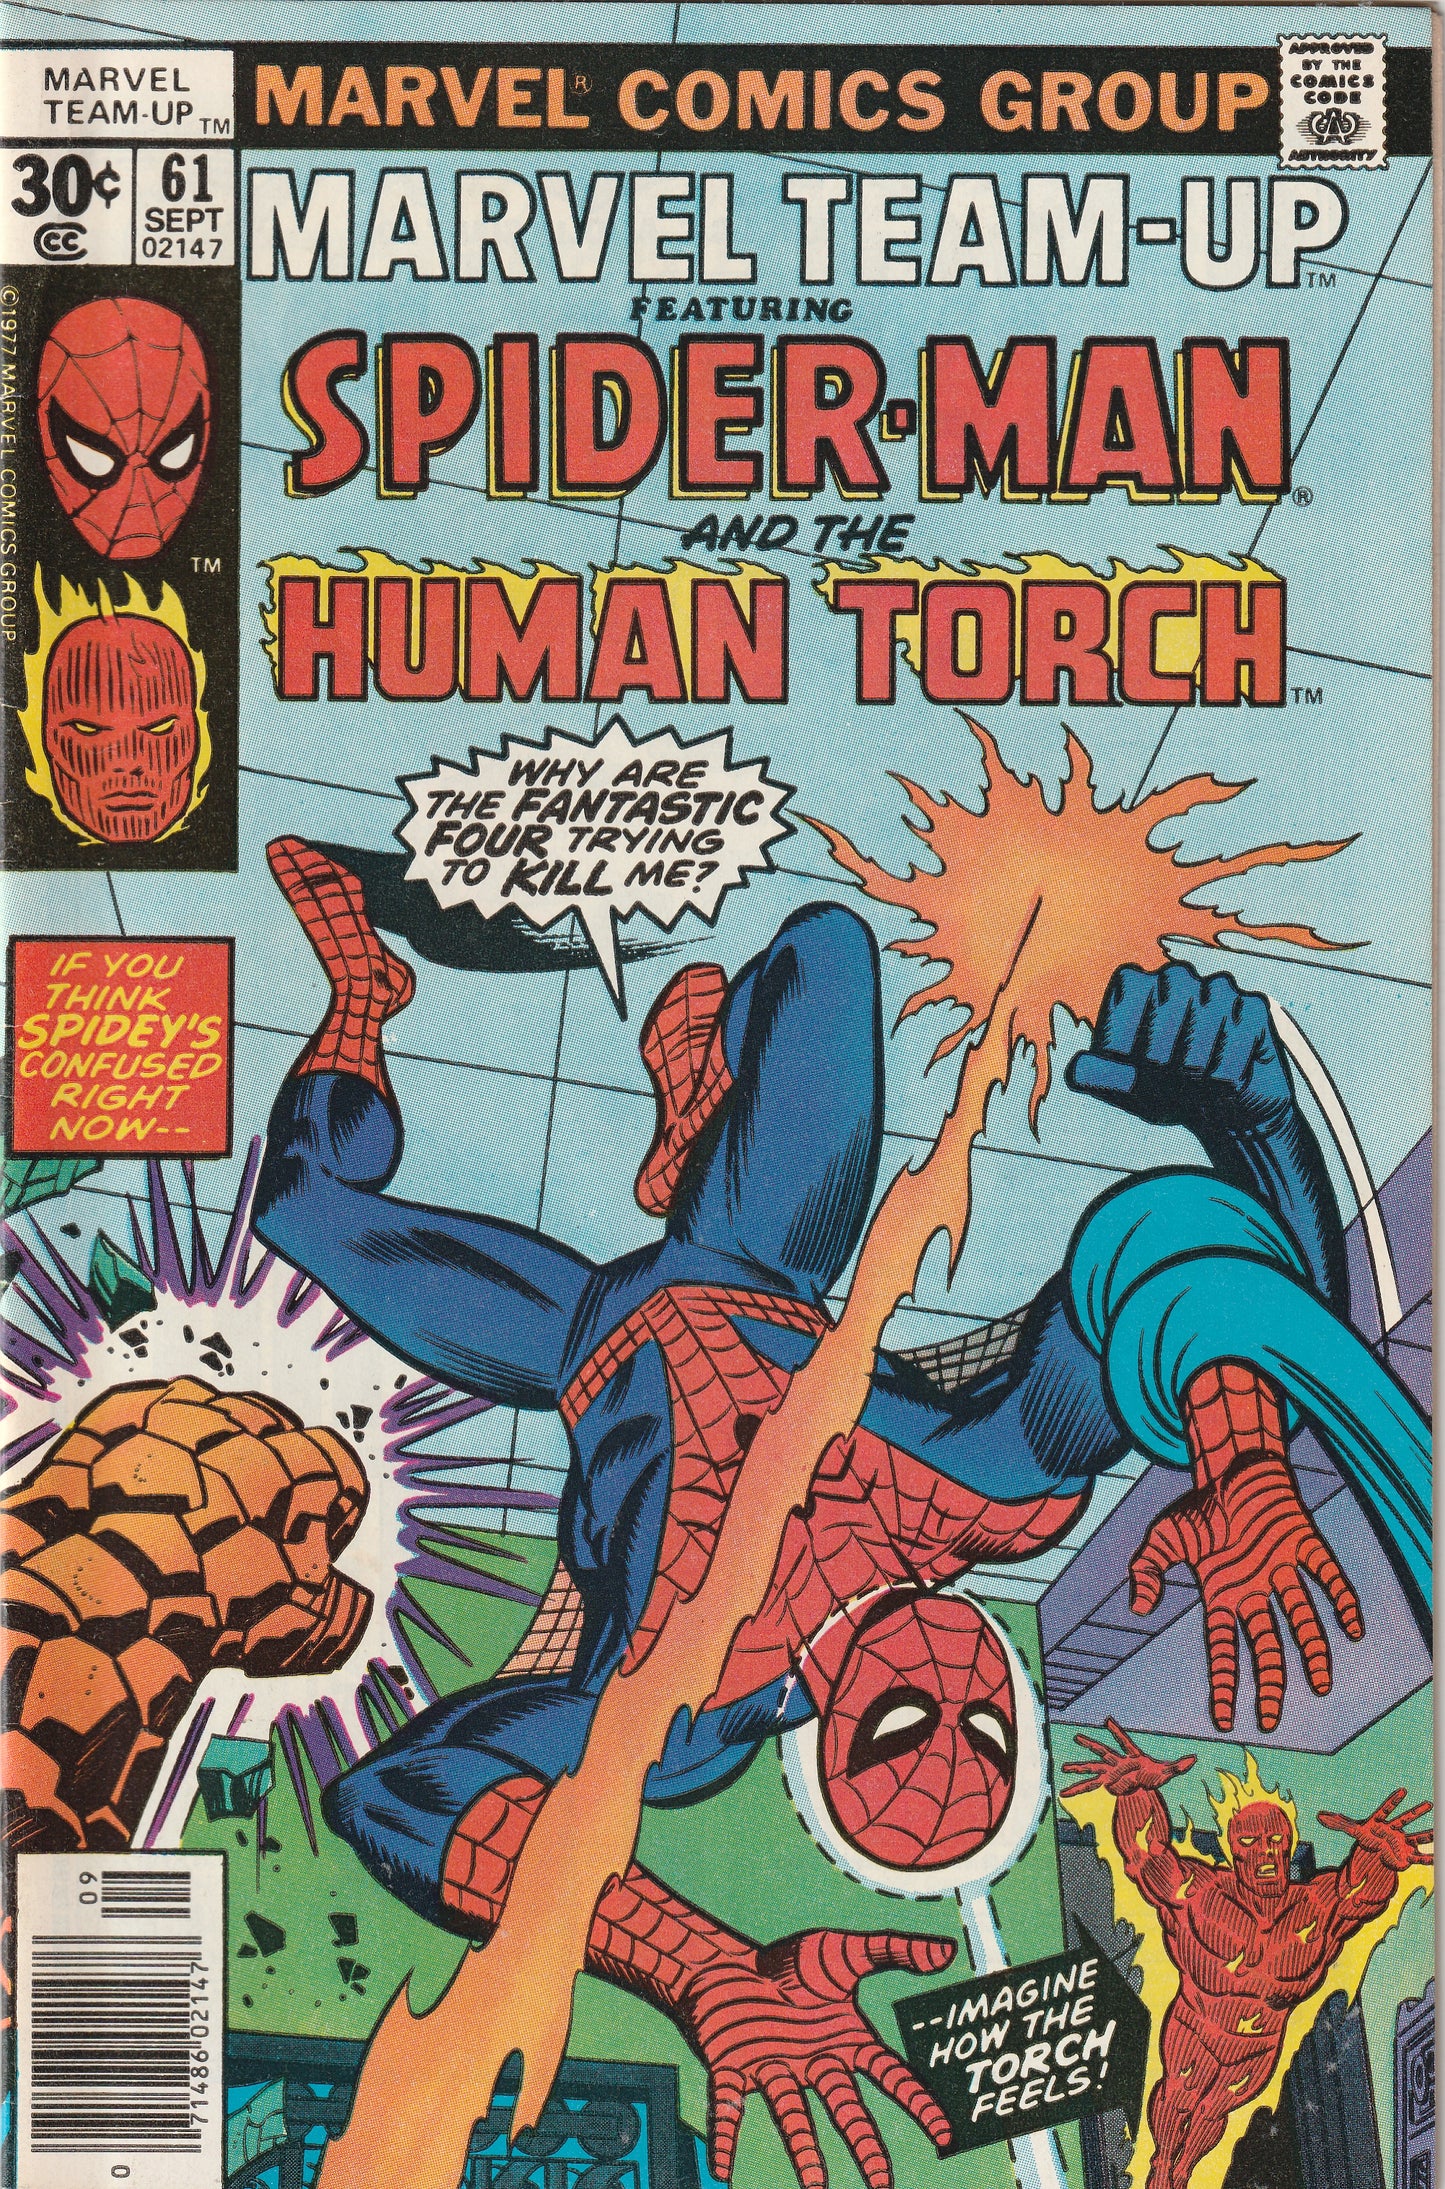 Marvel Team-Up #61 (1977) - Spider-Man & Human Torch